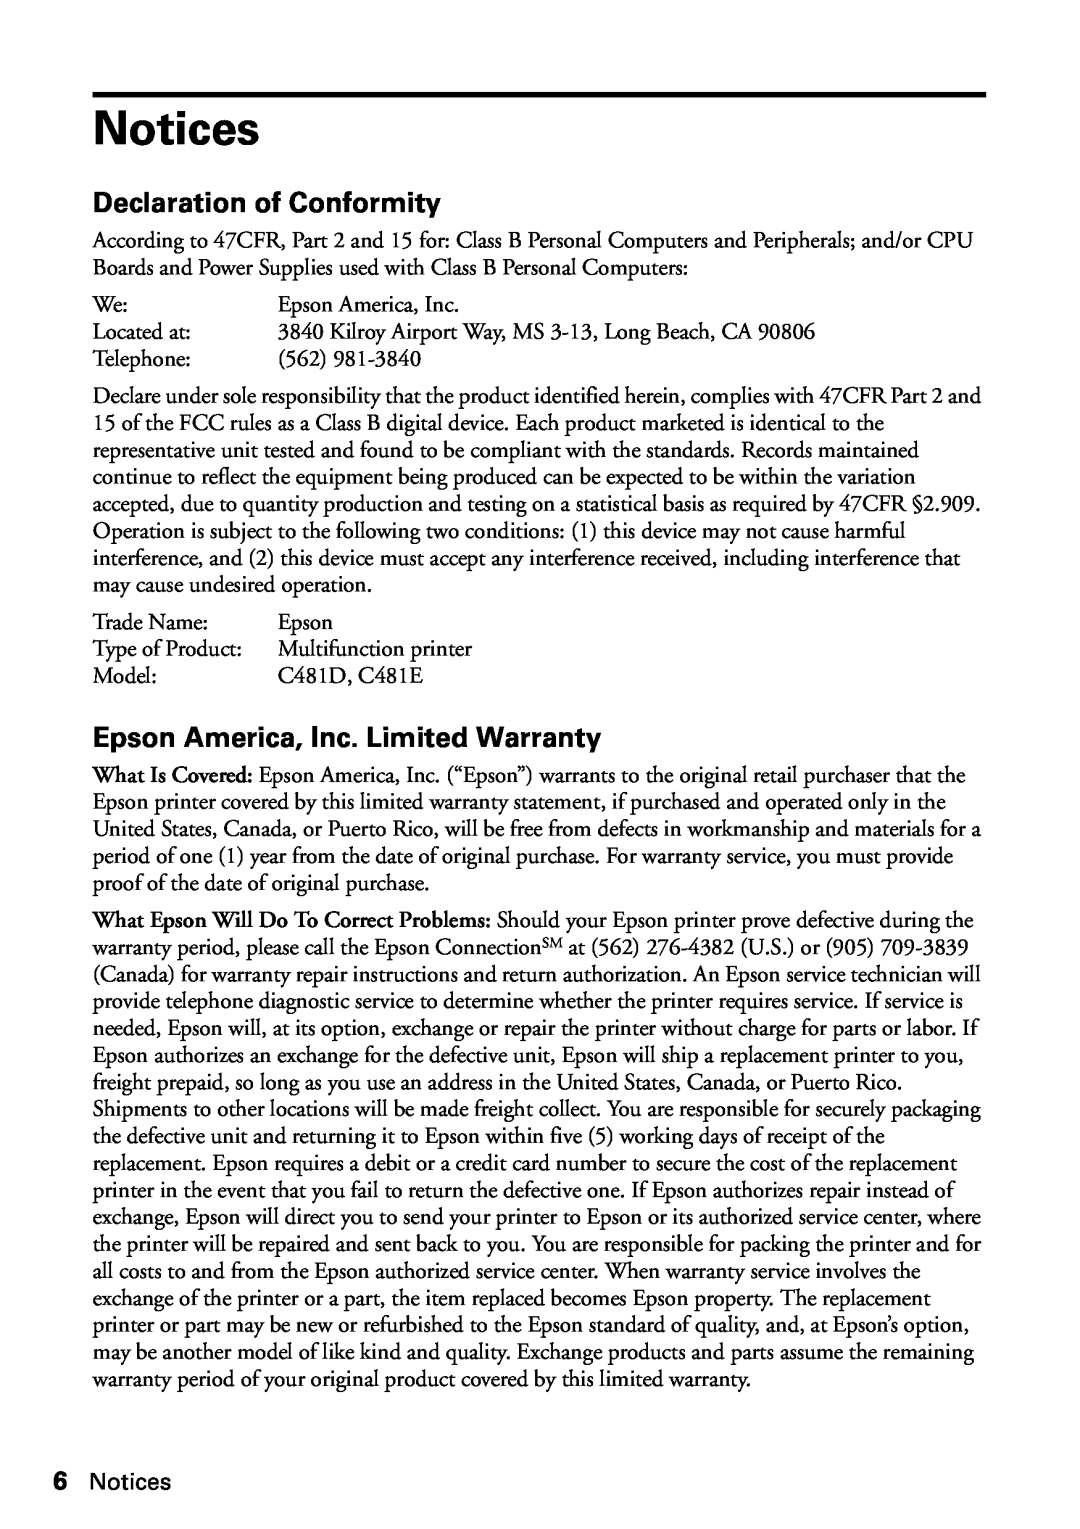 Epson WF-3620, WF-3640 manual Notices, Declaration of Conformity, Epson America, Inc. Limited Warranty 